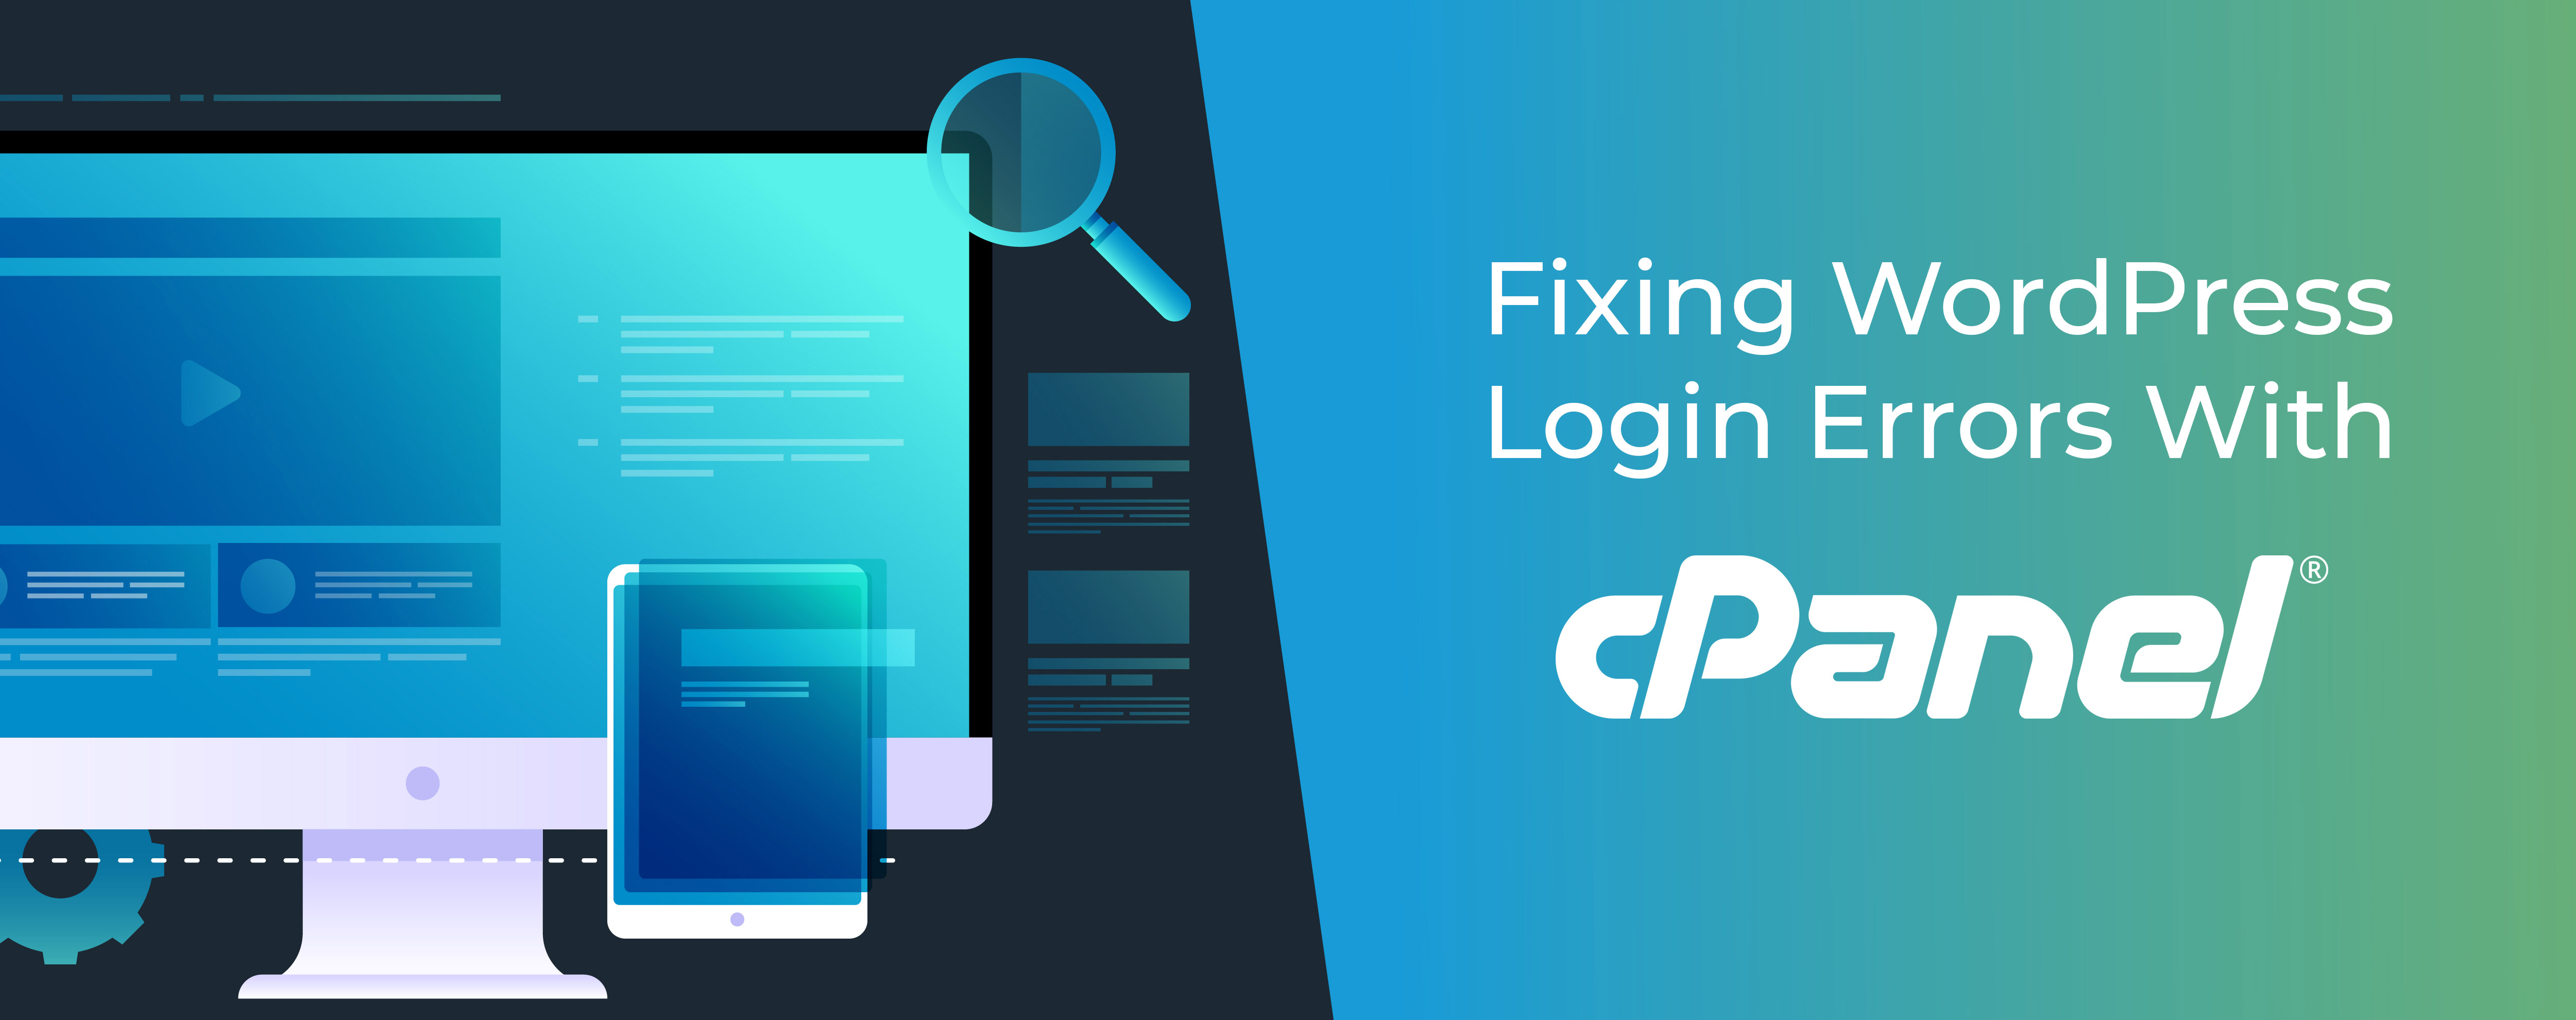 Fixing WordPress Login Errors With cPanel